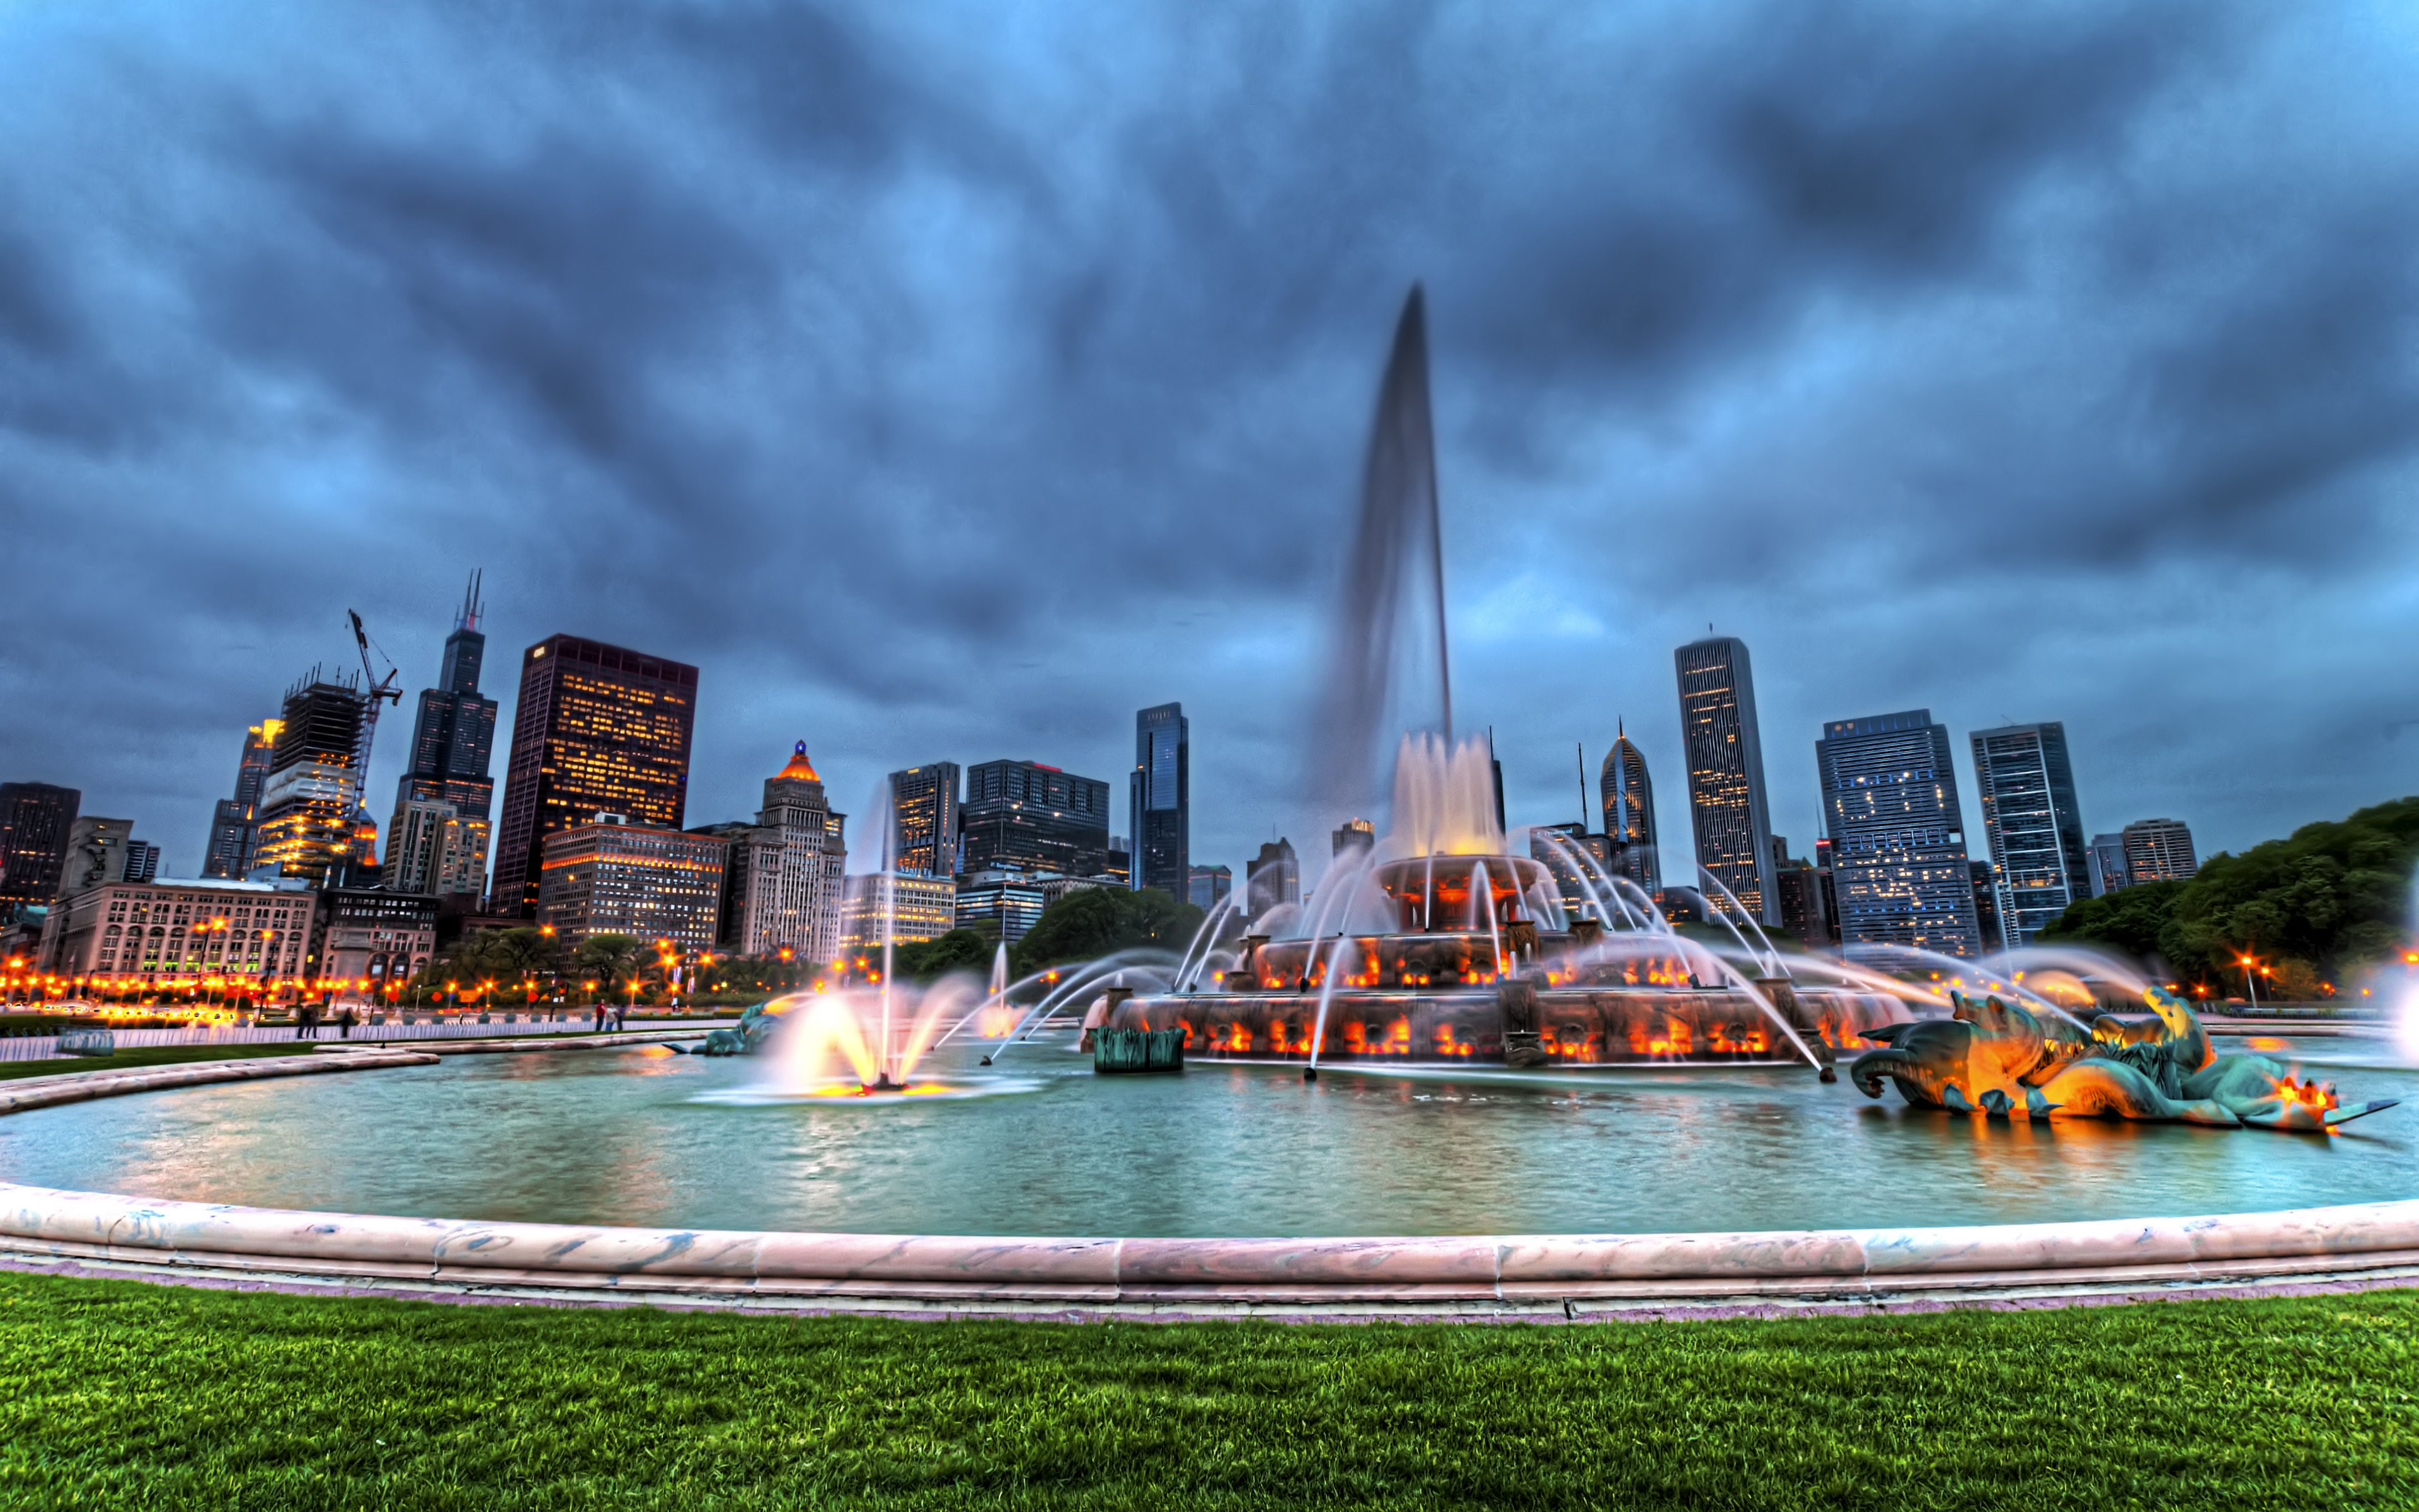 Buckingham Fountain Chicago Illinois United States of America